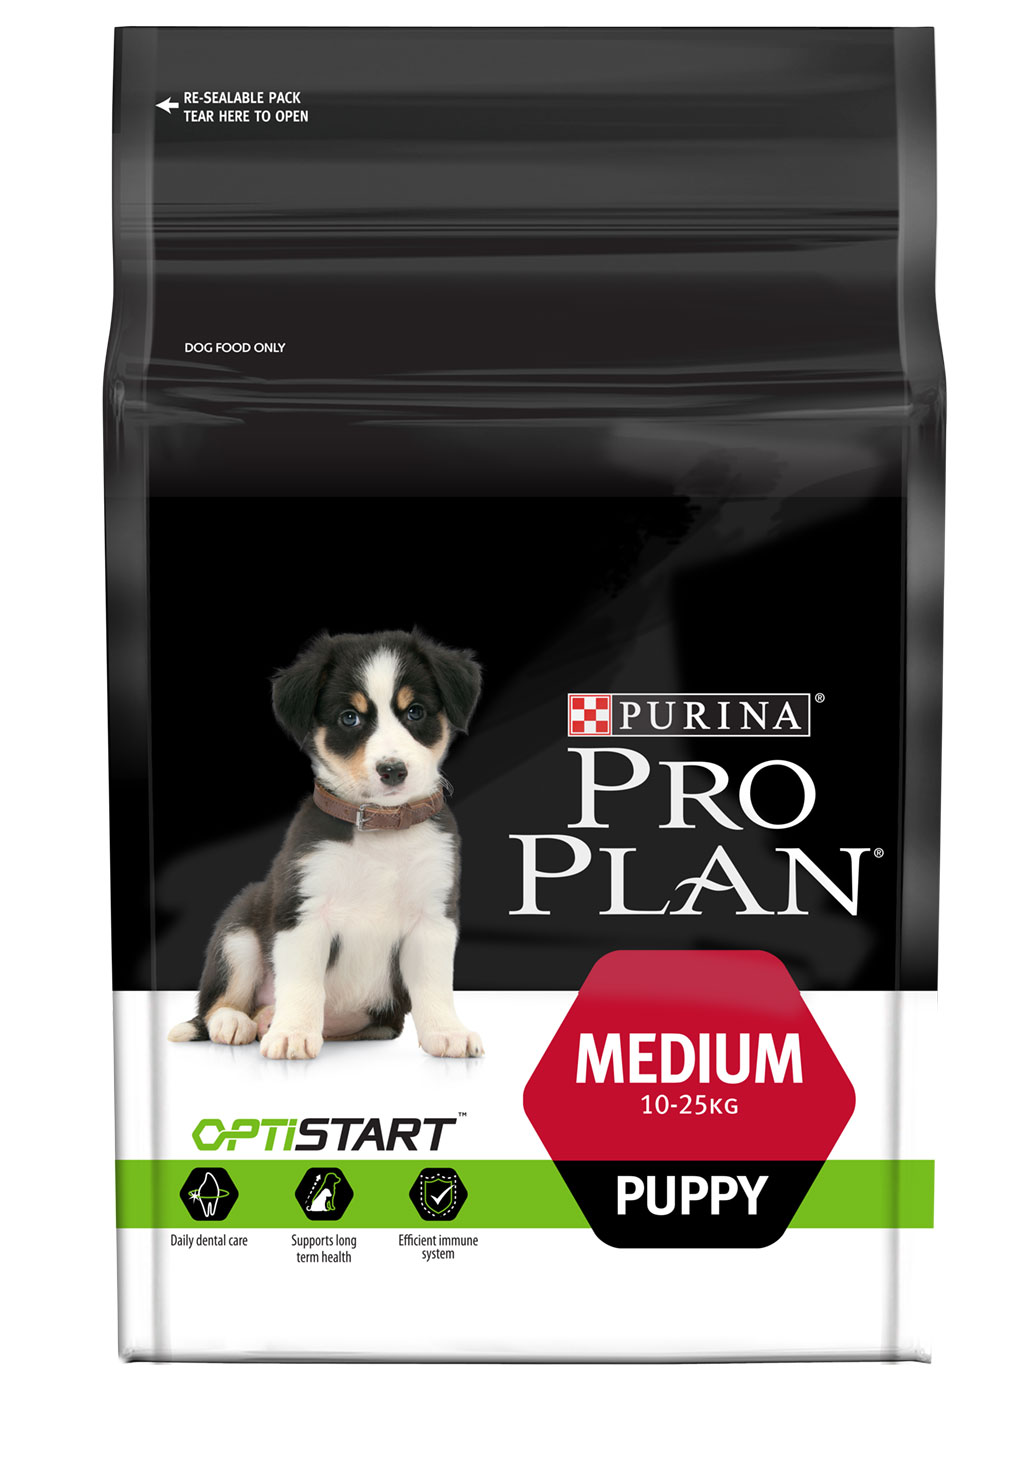 PRO PLAN Puppy Medium with OPTISTART 2.5kg 